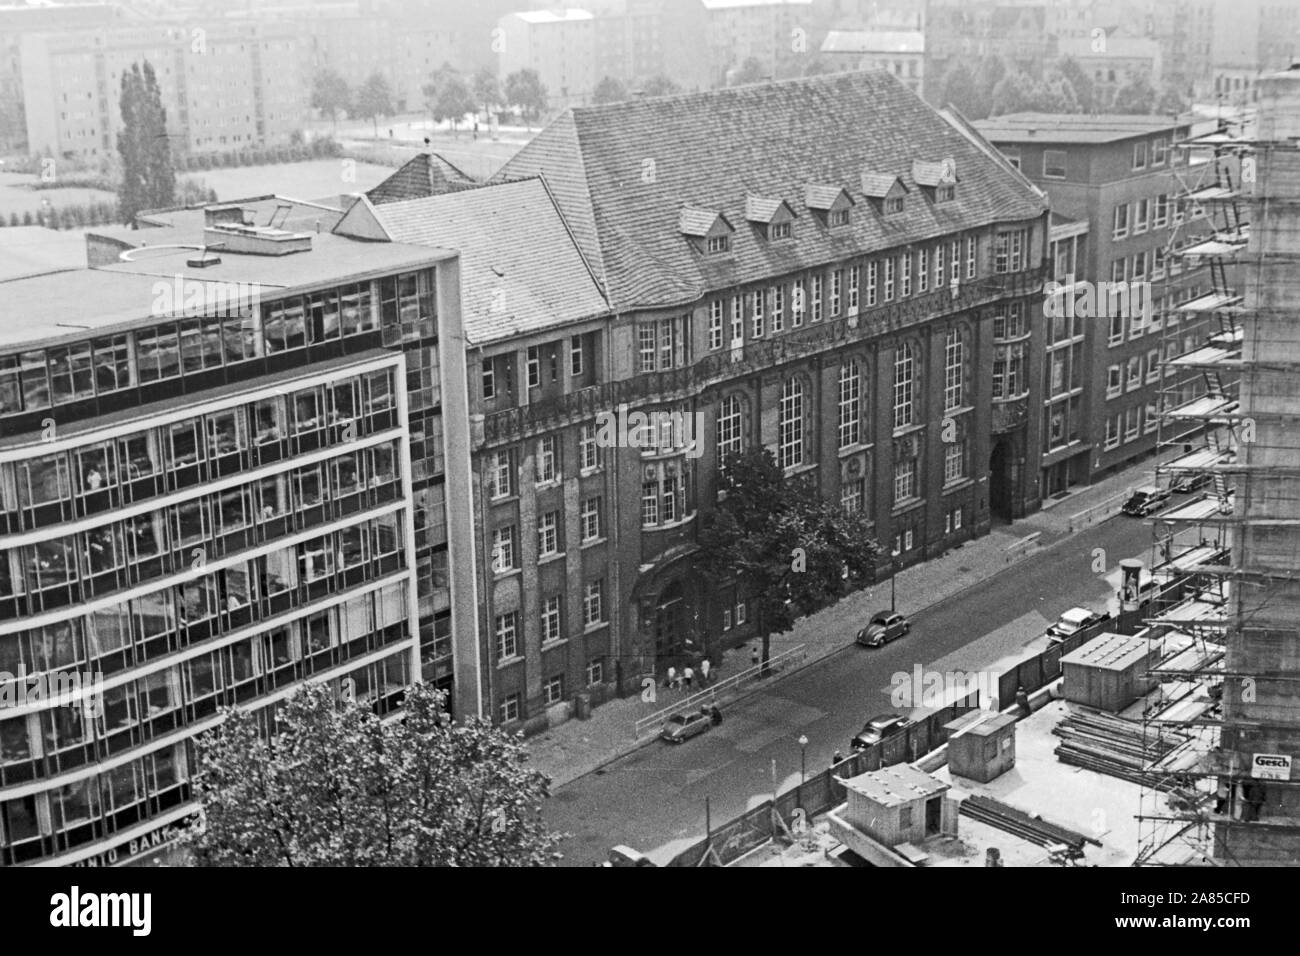 Blick auf einen Teil der Innenstadt von Berlin, Deutschland 1961. Vista di una parte della parte interna della città di Berlino, Germania 1961. Foto Stock